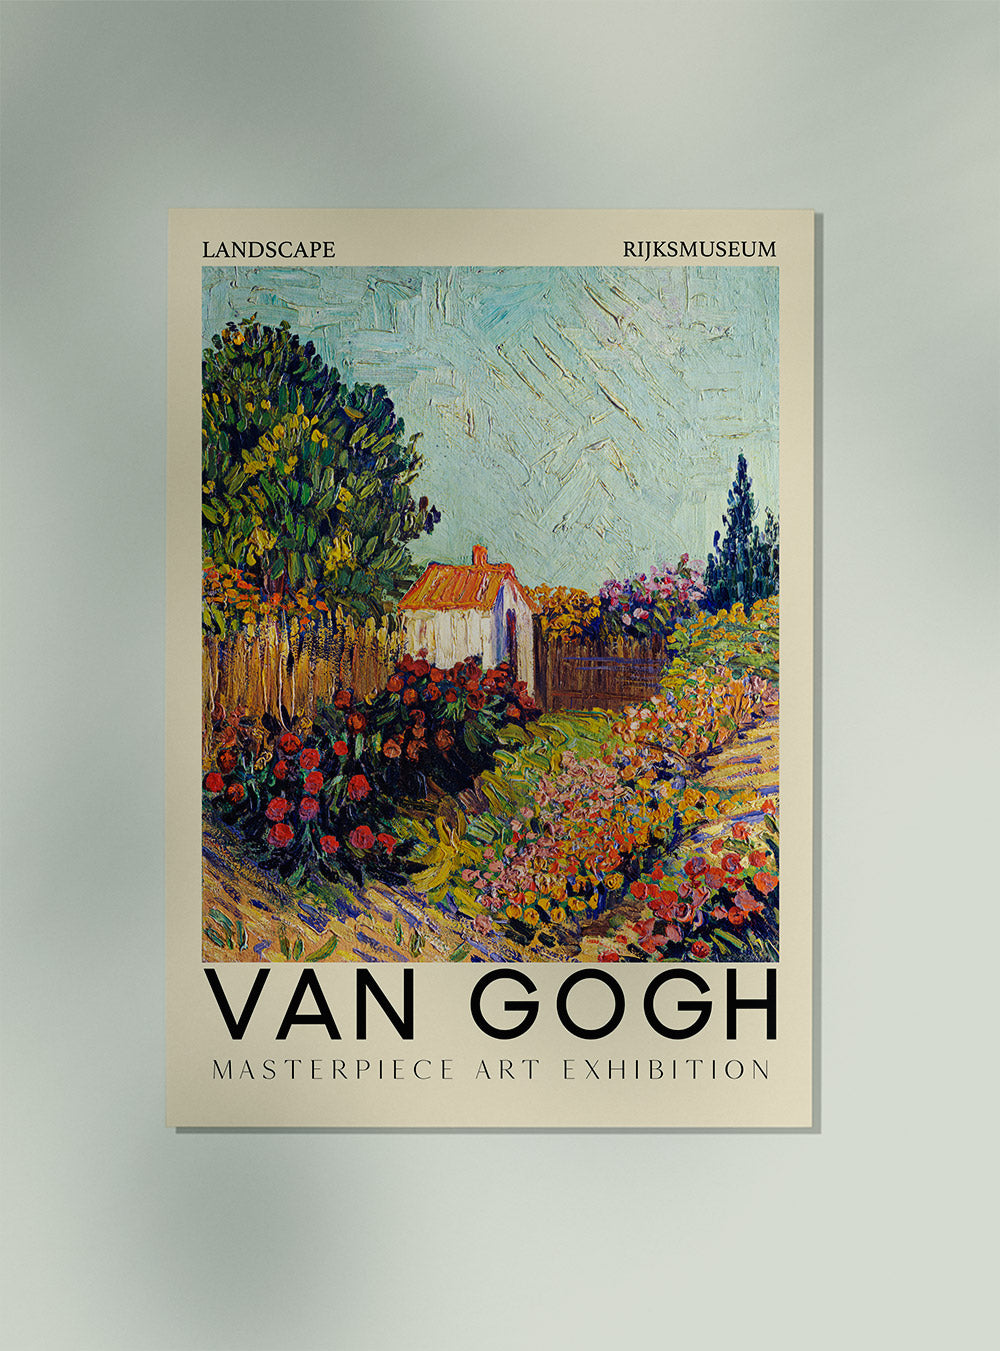 Landscape Art Exhibition Poster by Van Gogh